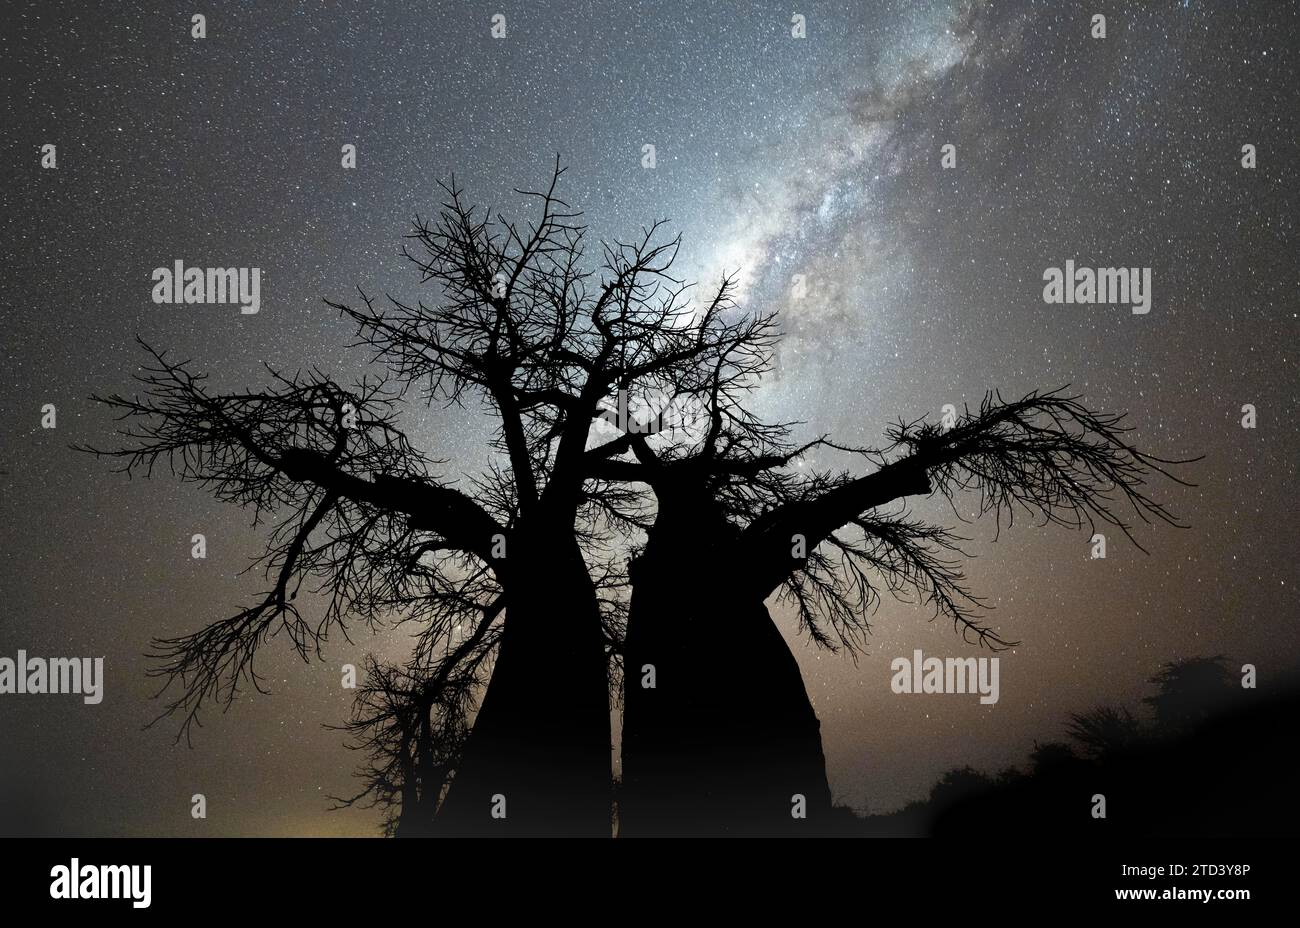 Sagoma di un baobab con cielo stellato e via Lattea, baobab africano (Adansonia digitata), ripresa notturna, isola di Kubu, salina Makgadikgadi Foto Stock